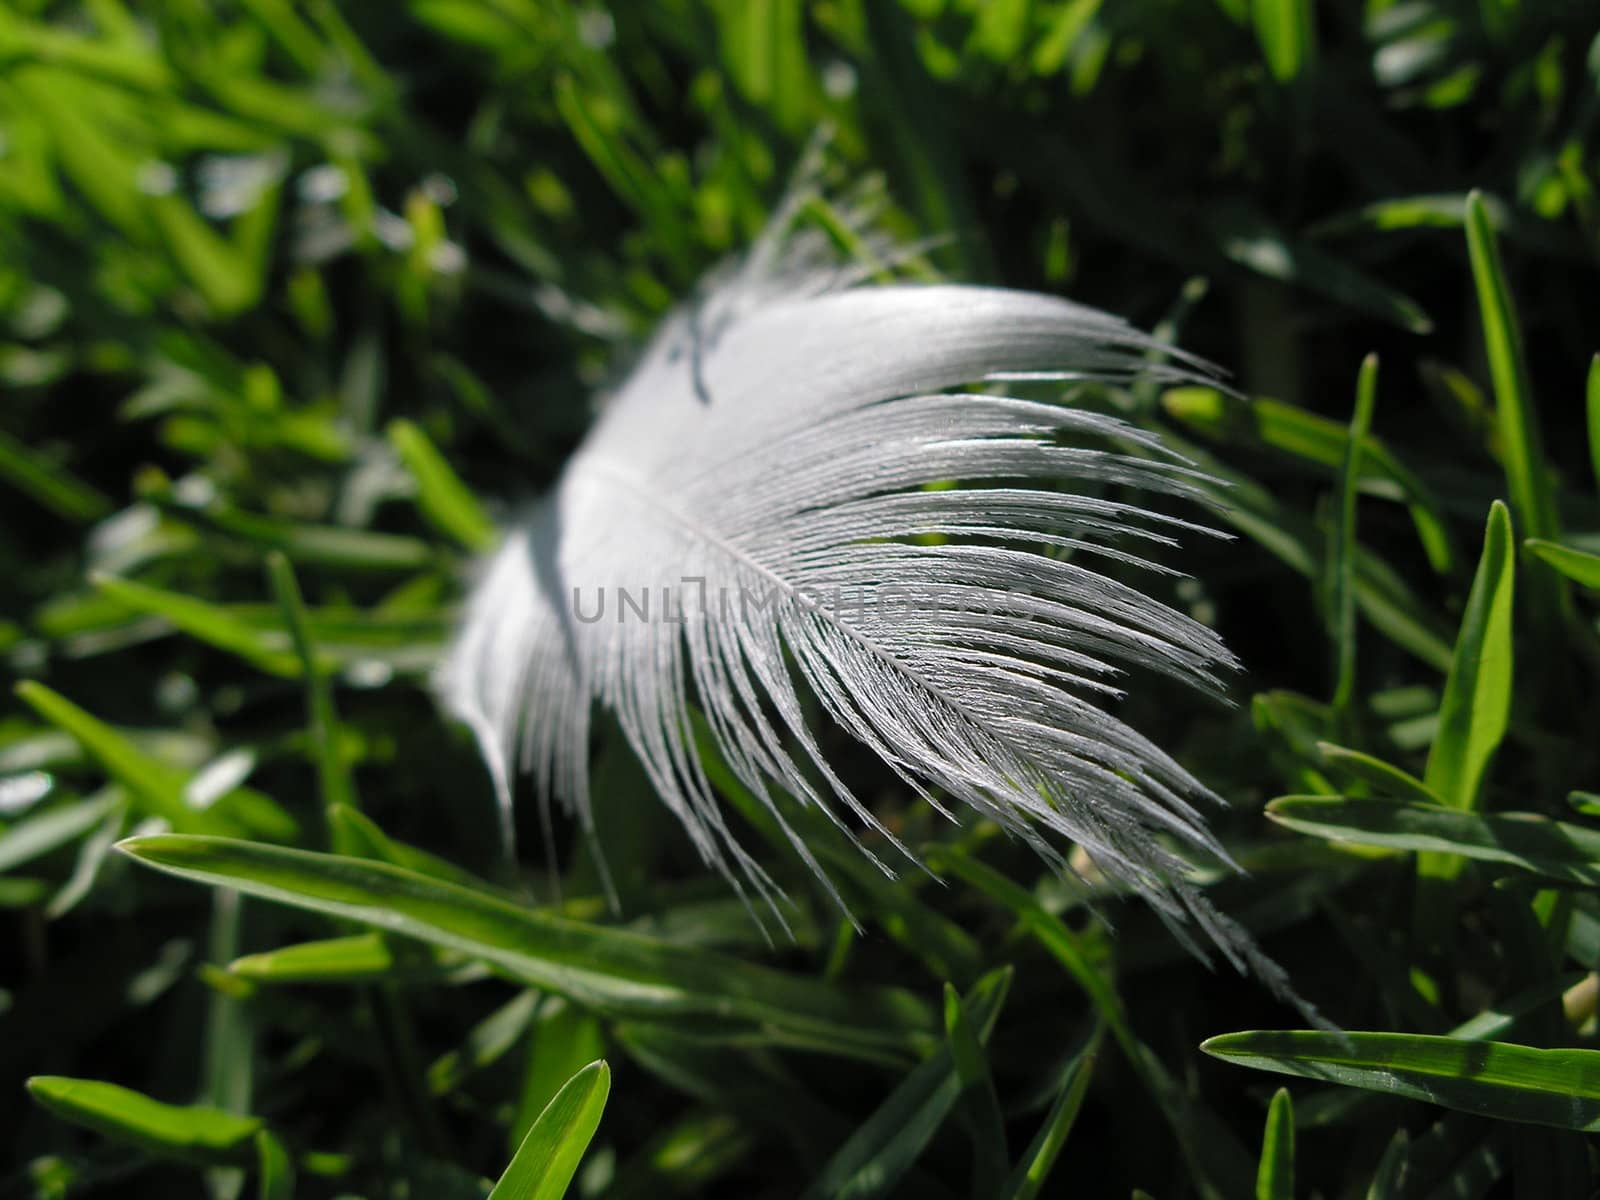 Feather in the grass by mitek55